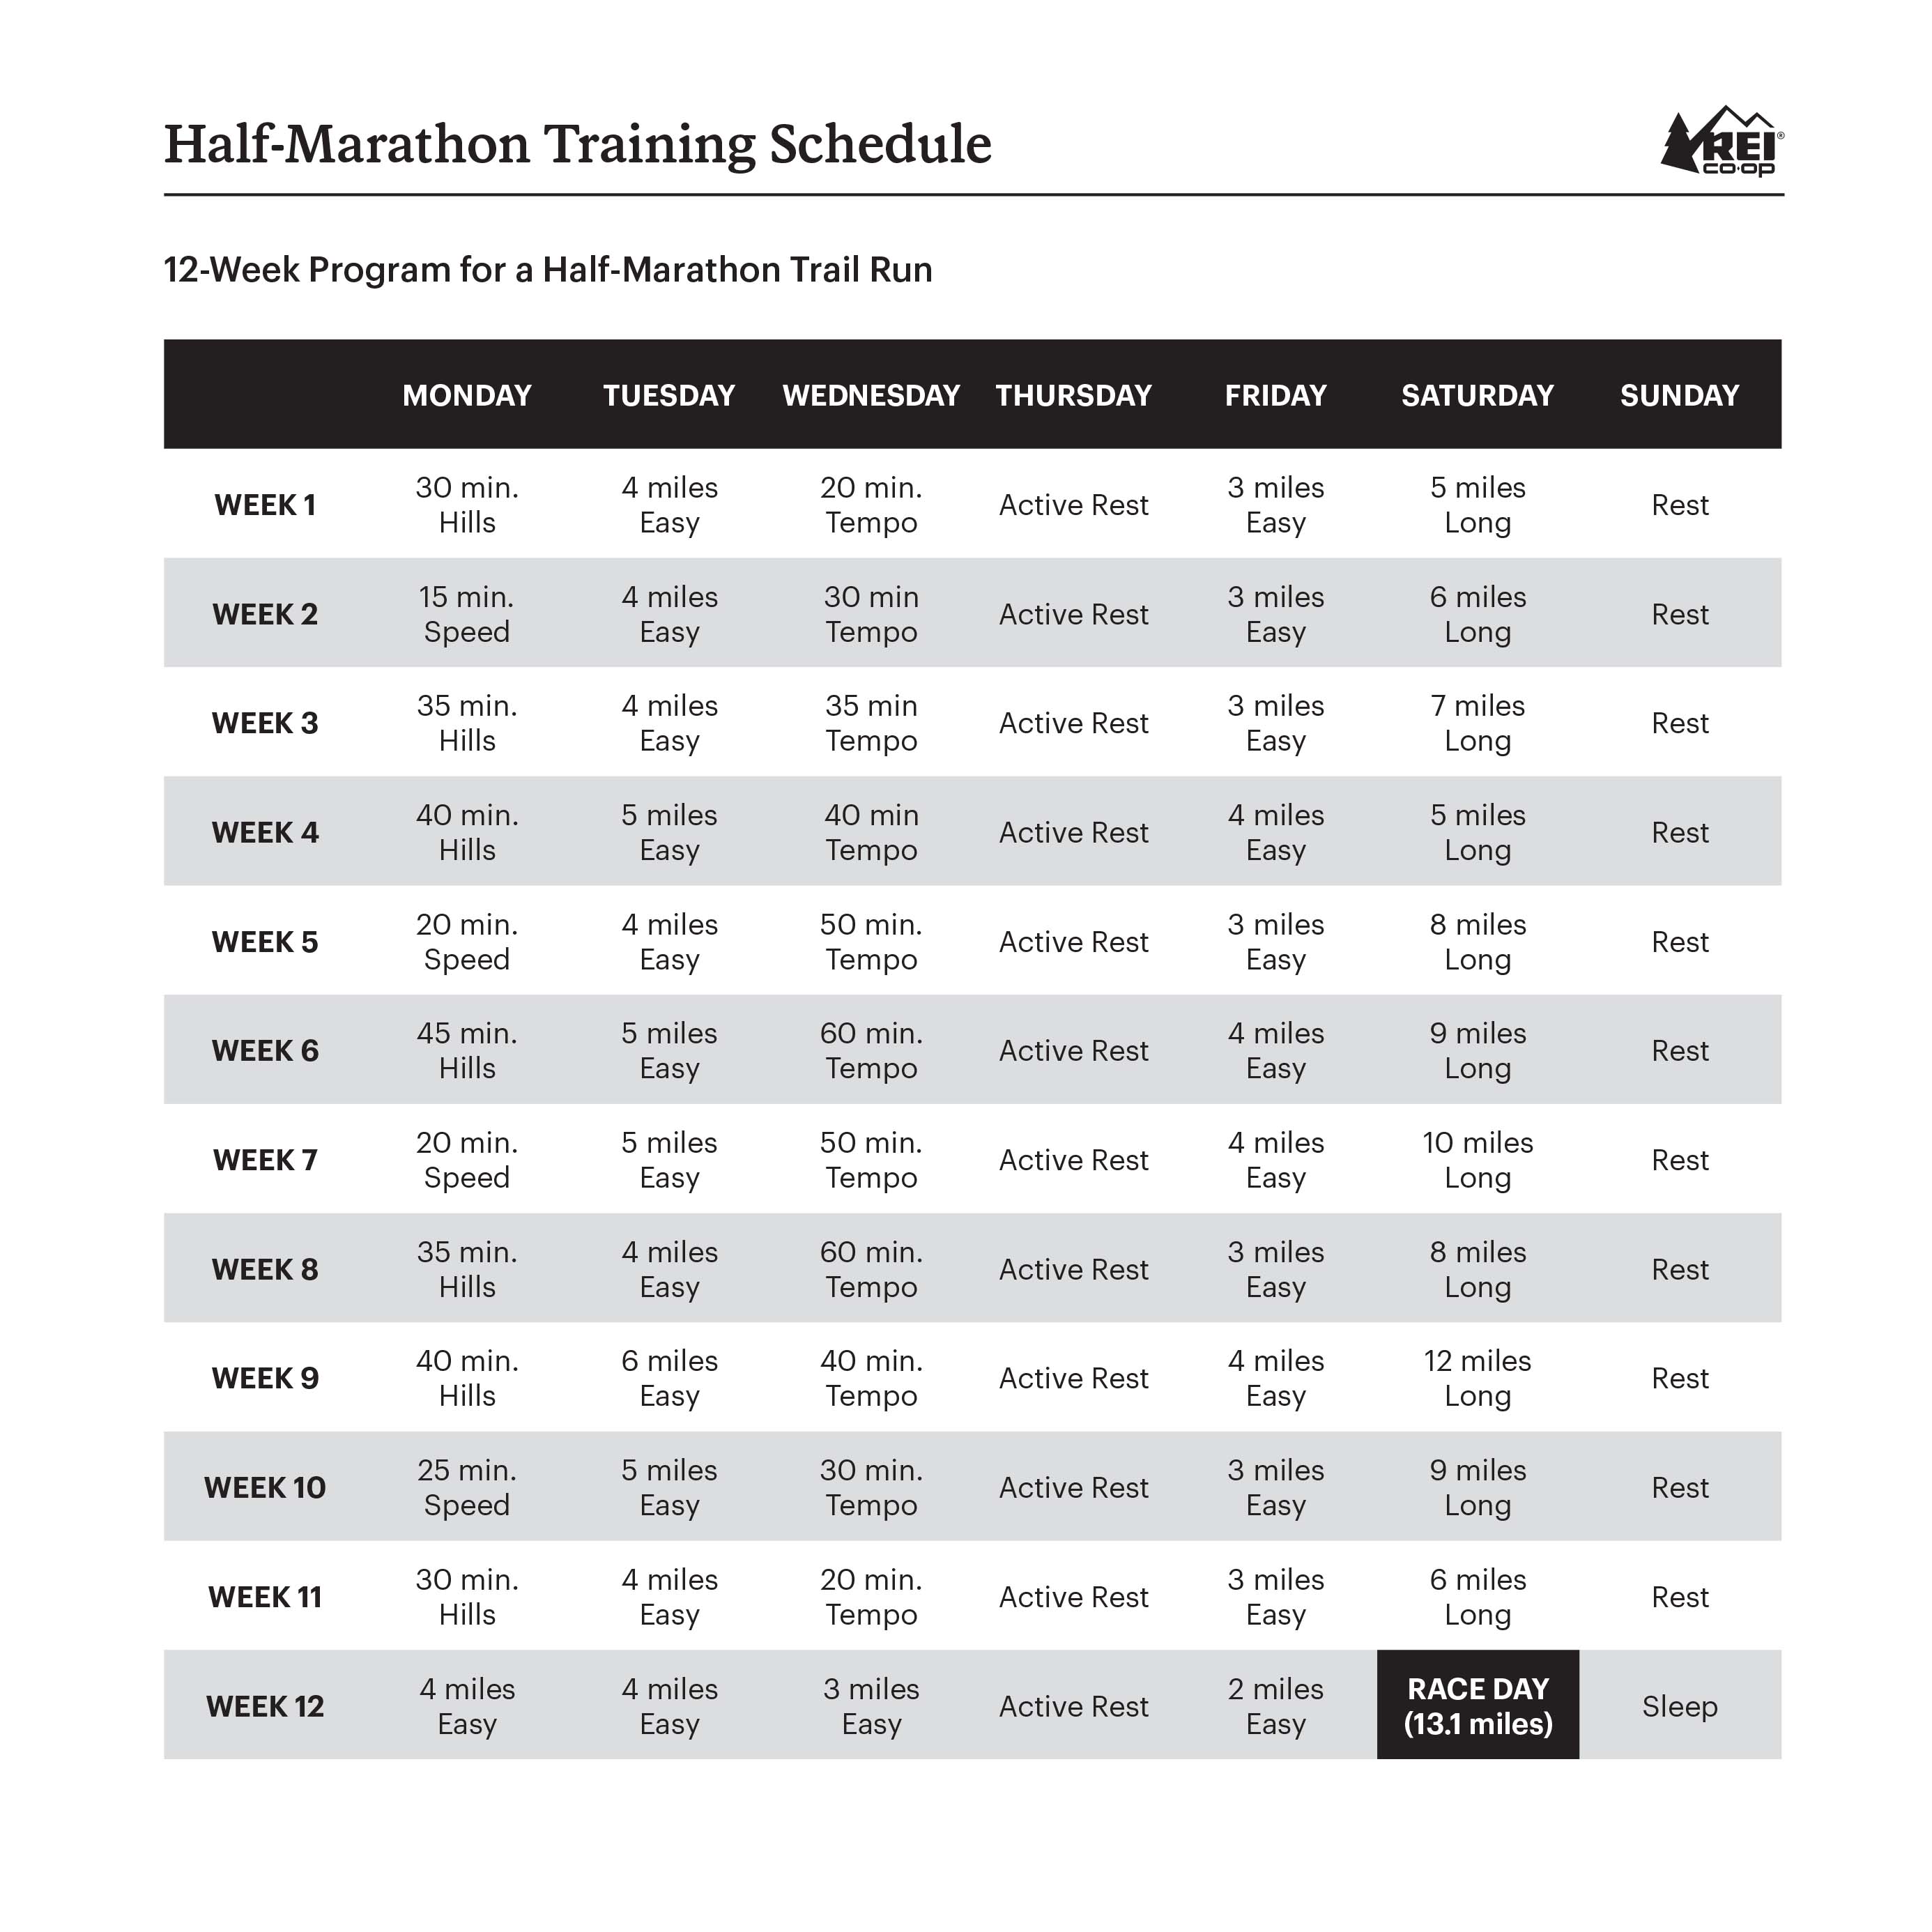 training plan table for half marathon trail running race